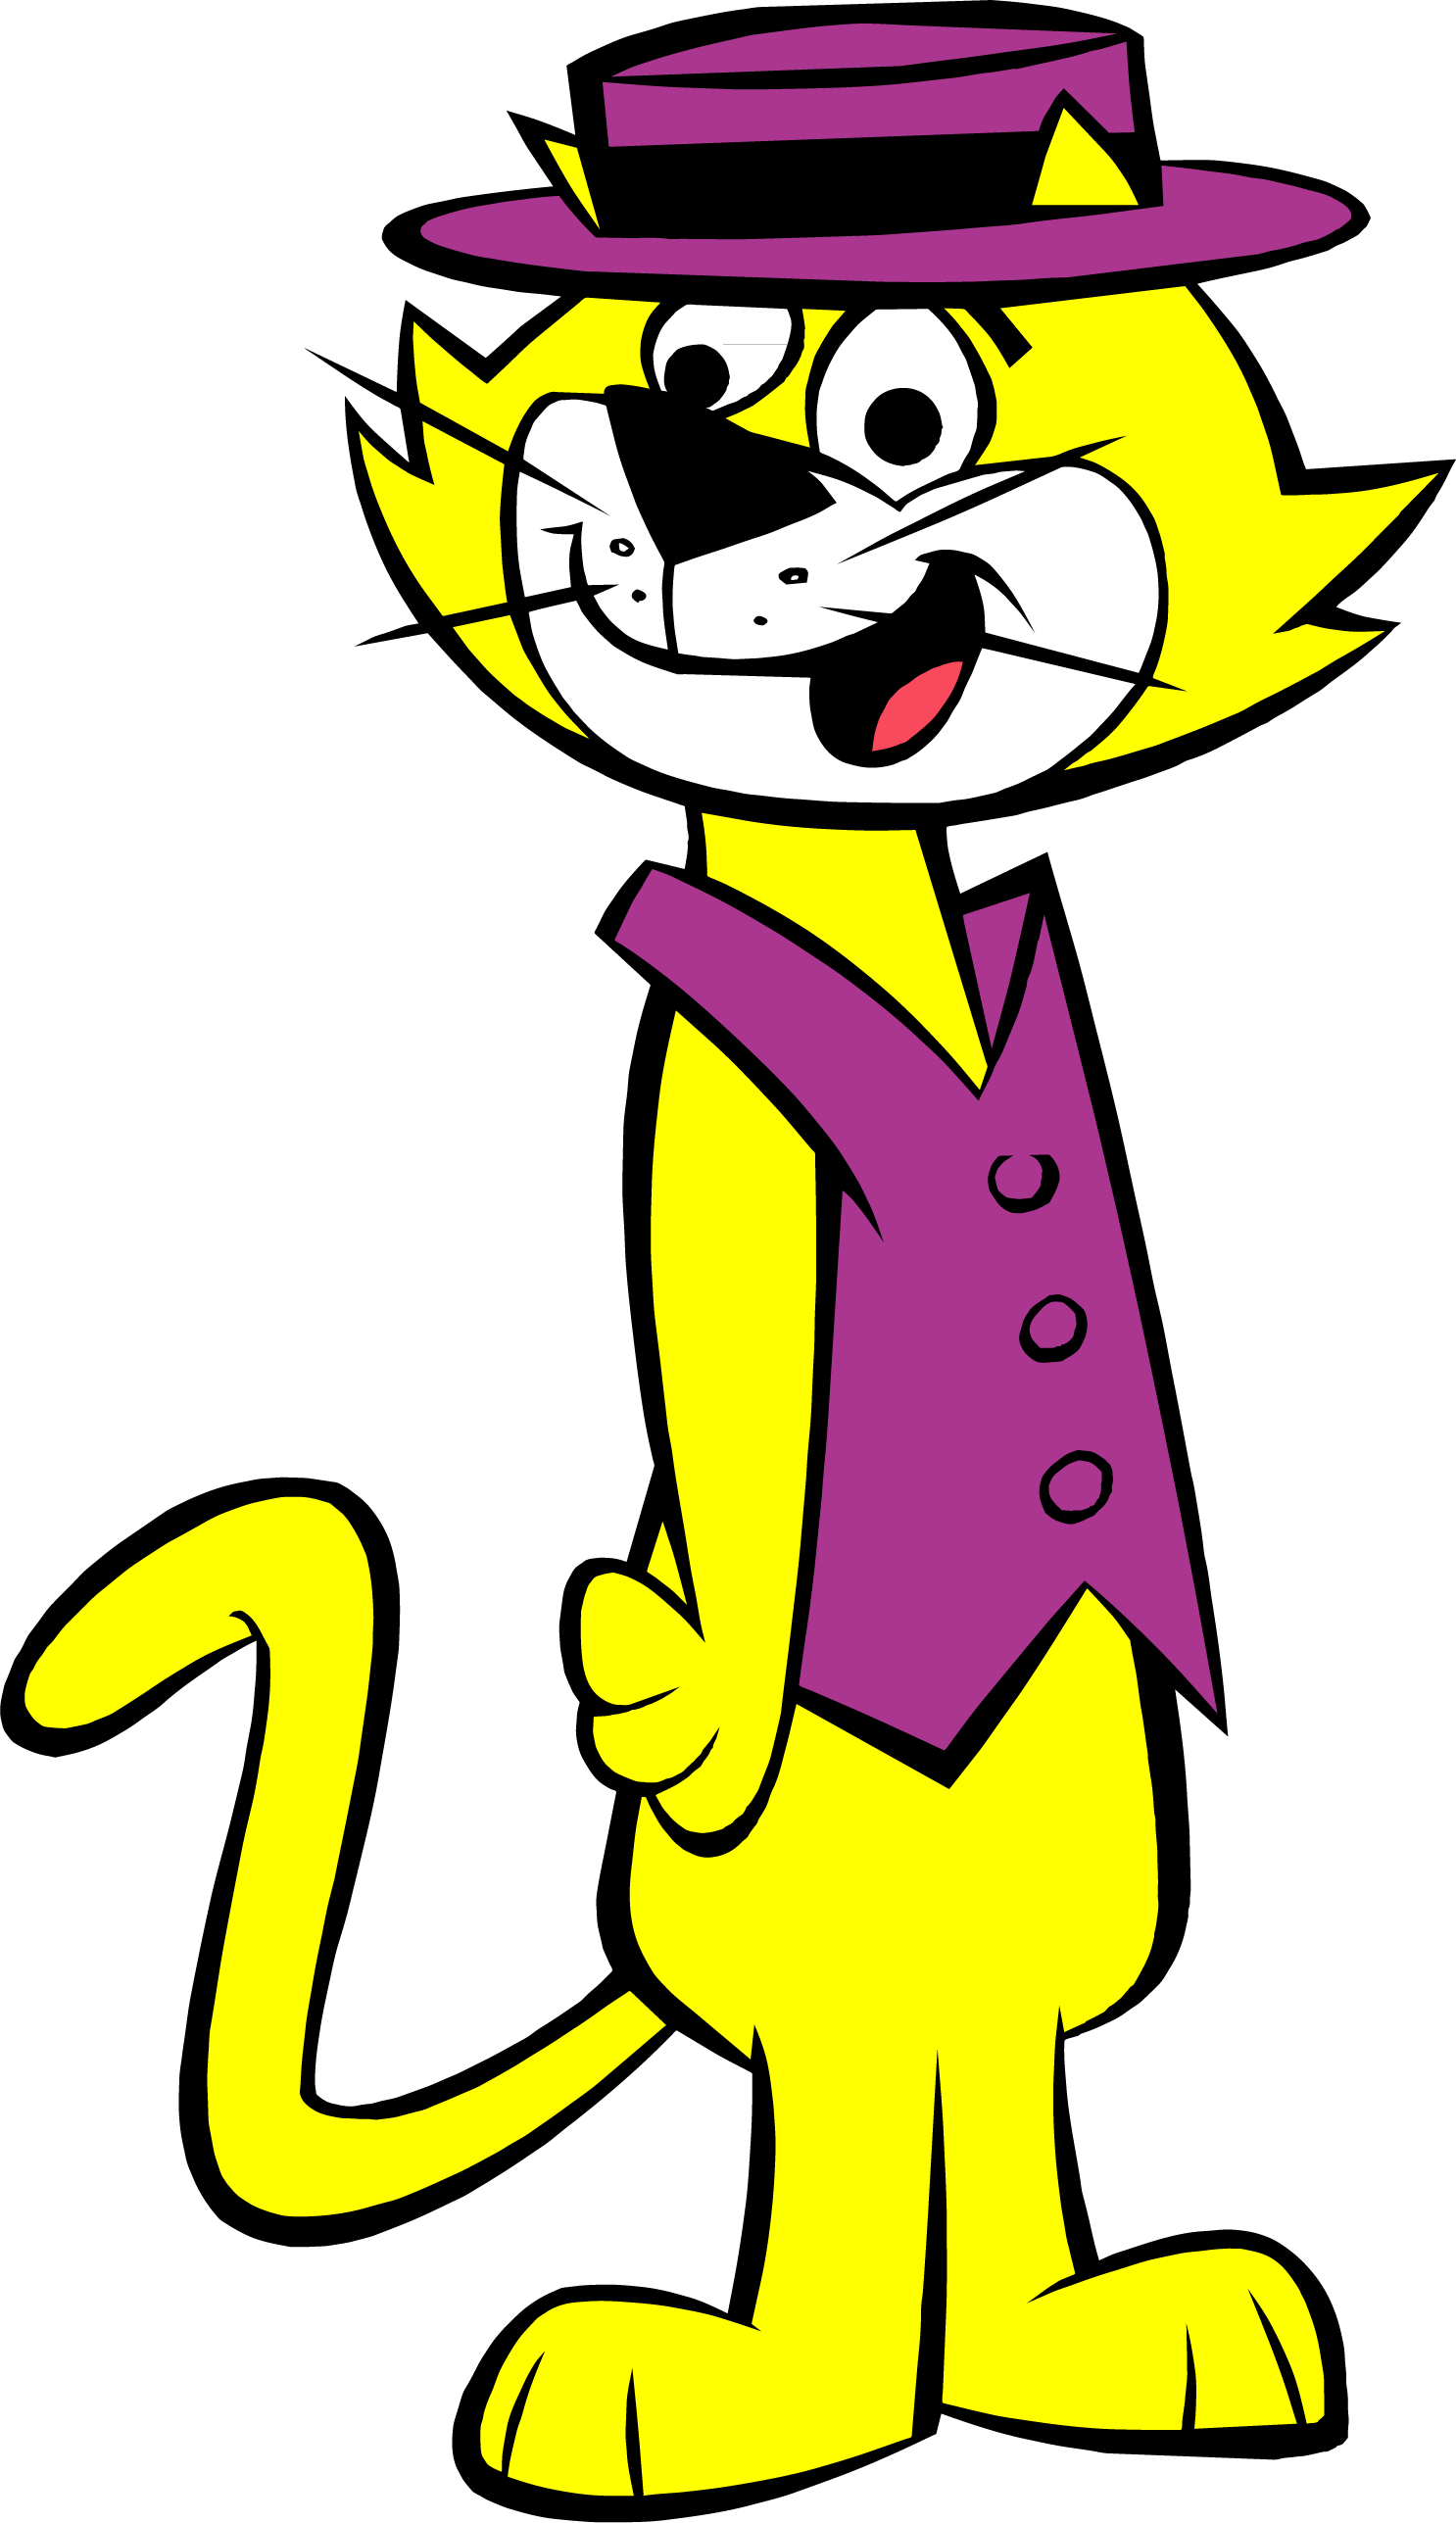 topcat cartoon character